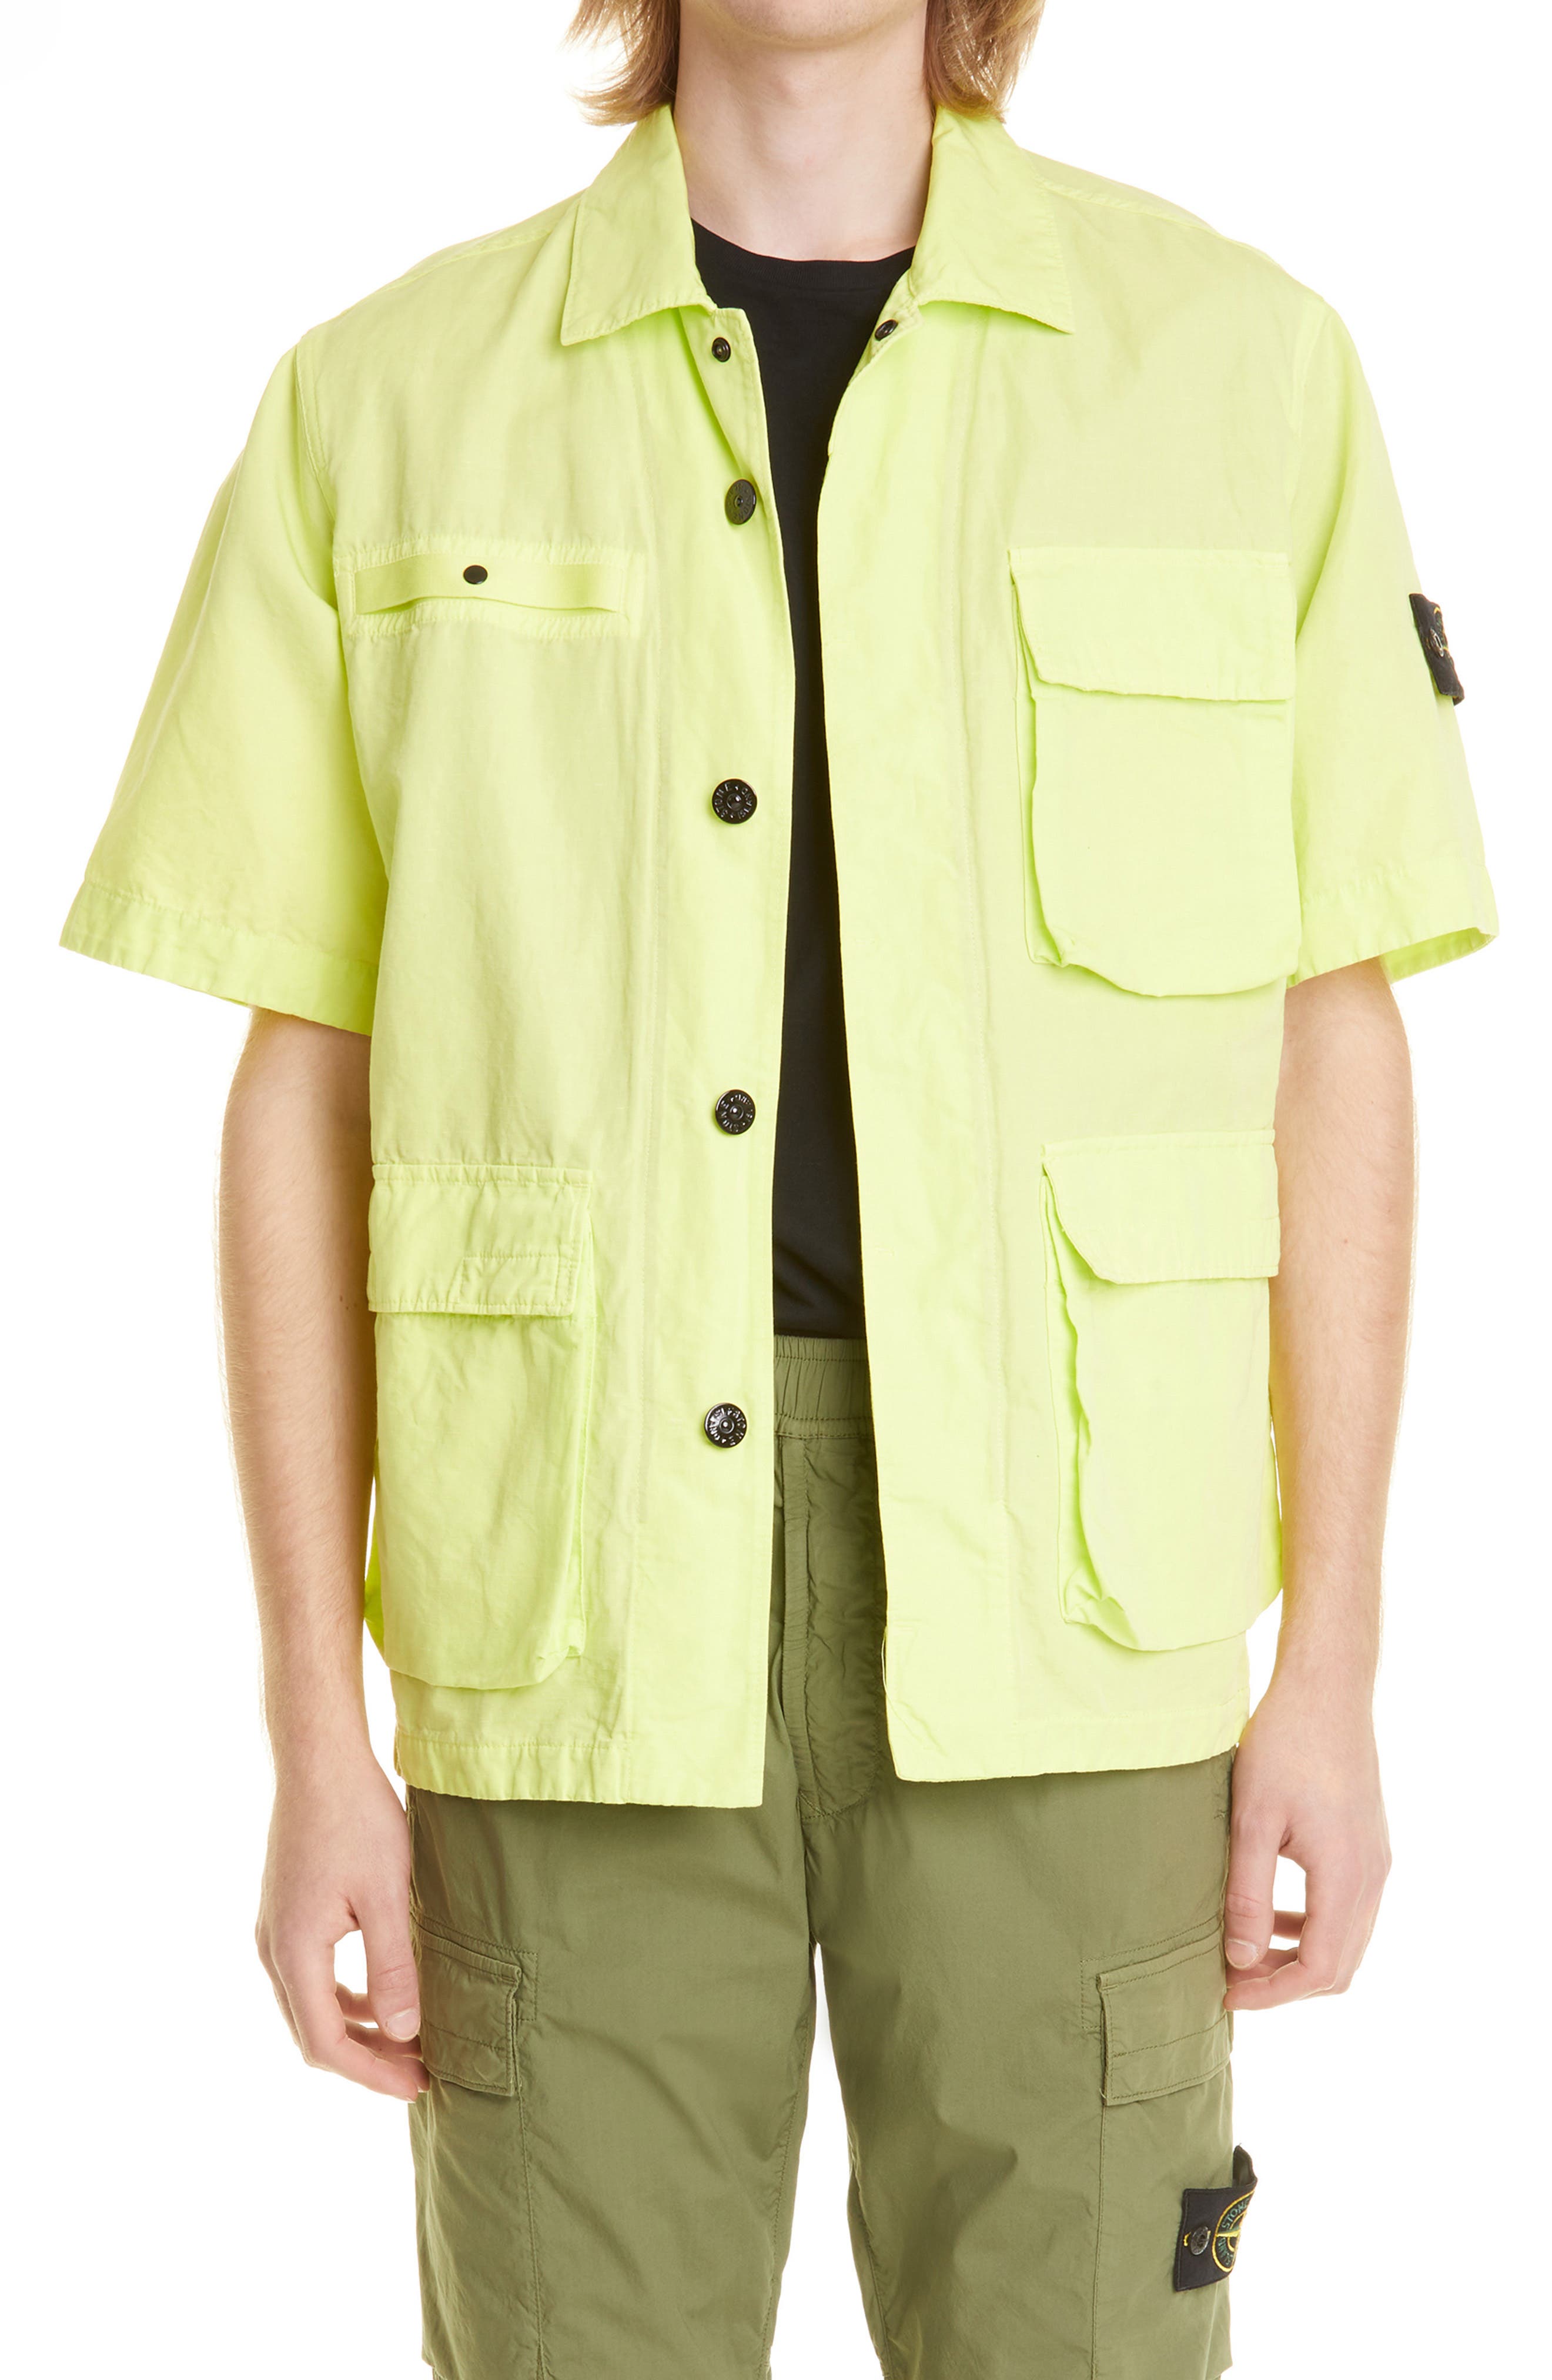 Stone Island Short Sleeve Cotton & Linen Shirt Jacket in Lemon